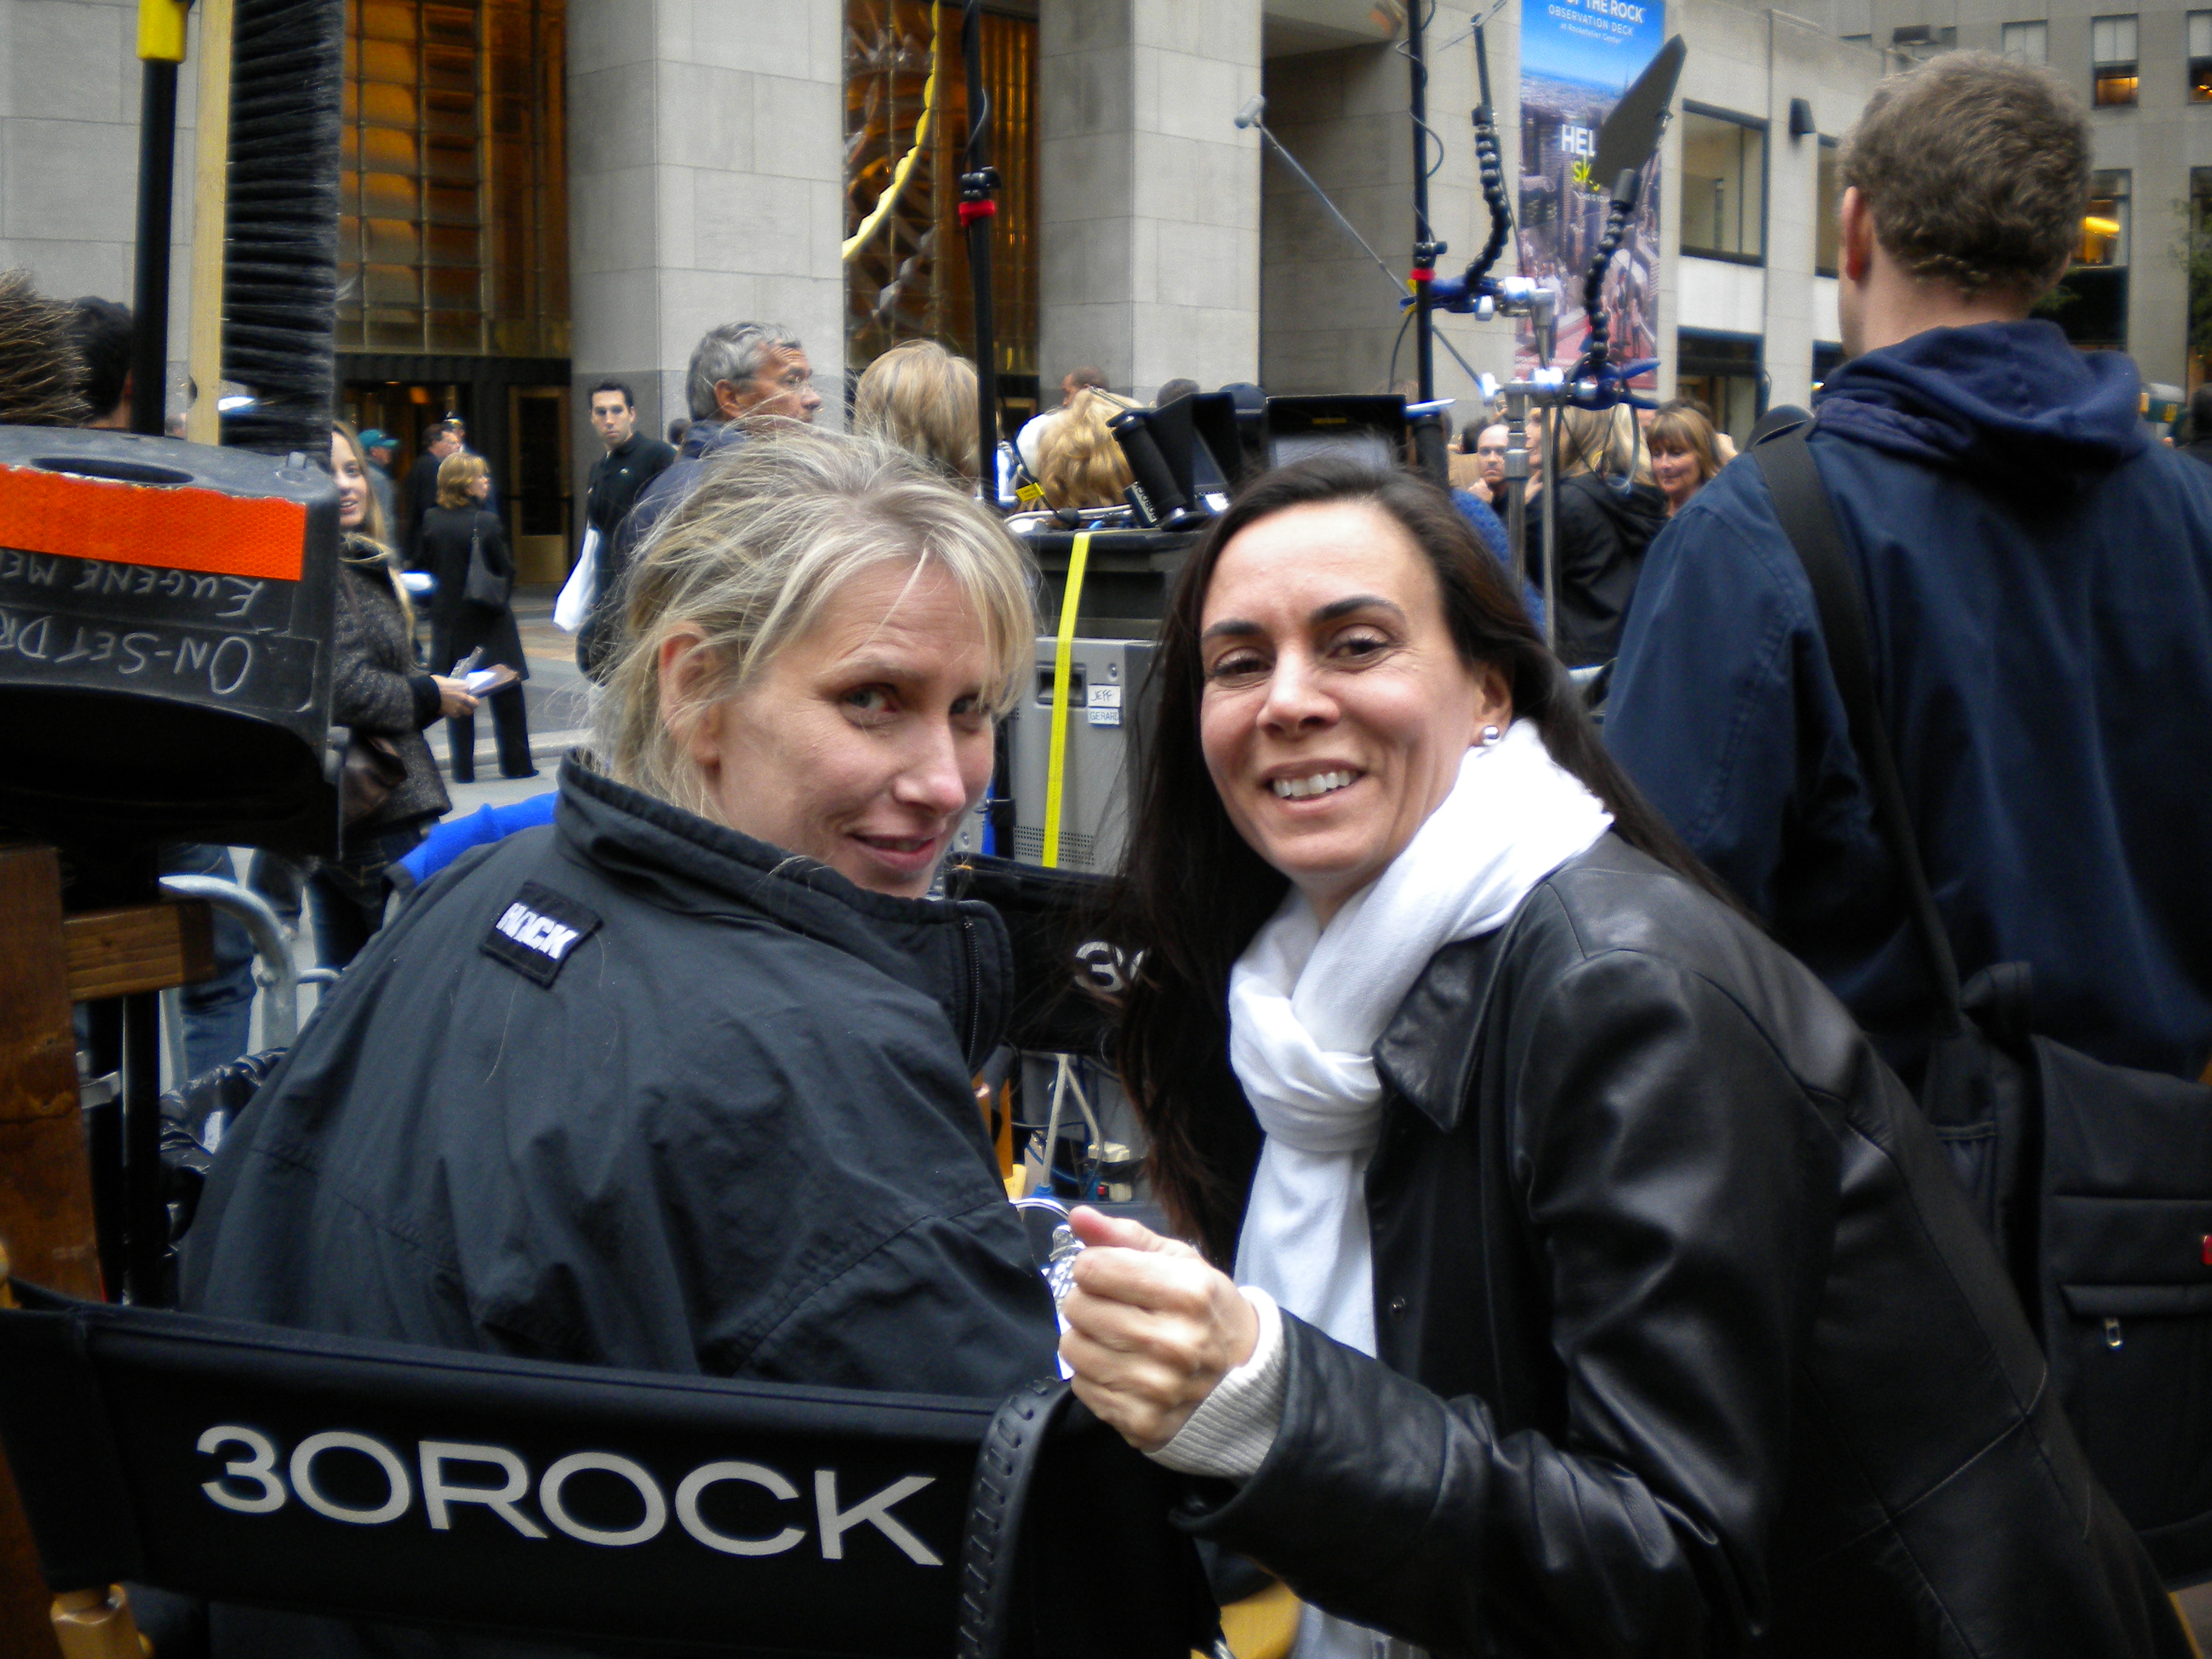 Claire Cowperthwaite, Director, 30 Rock